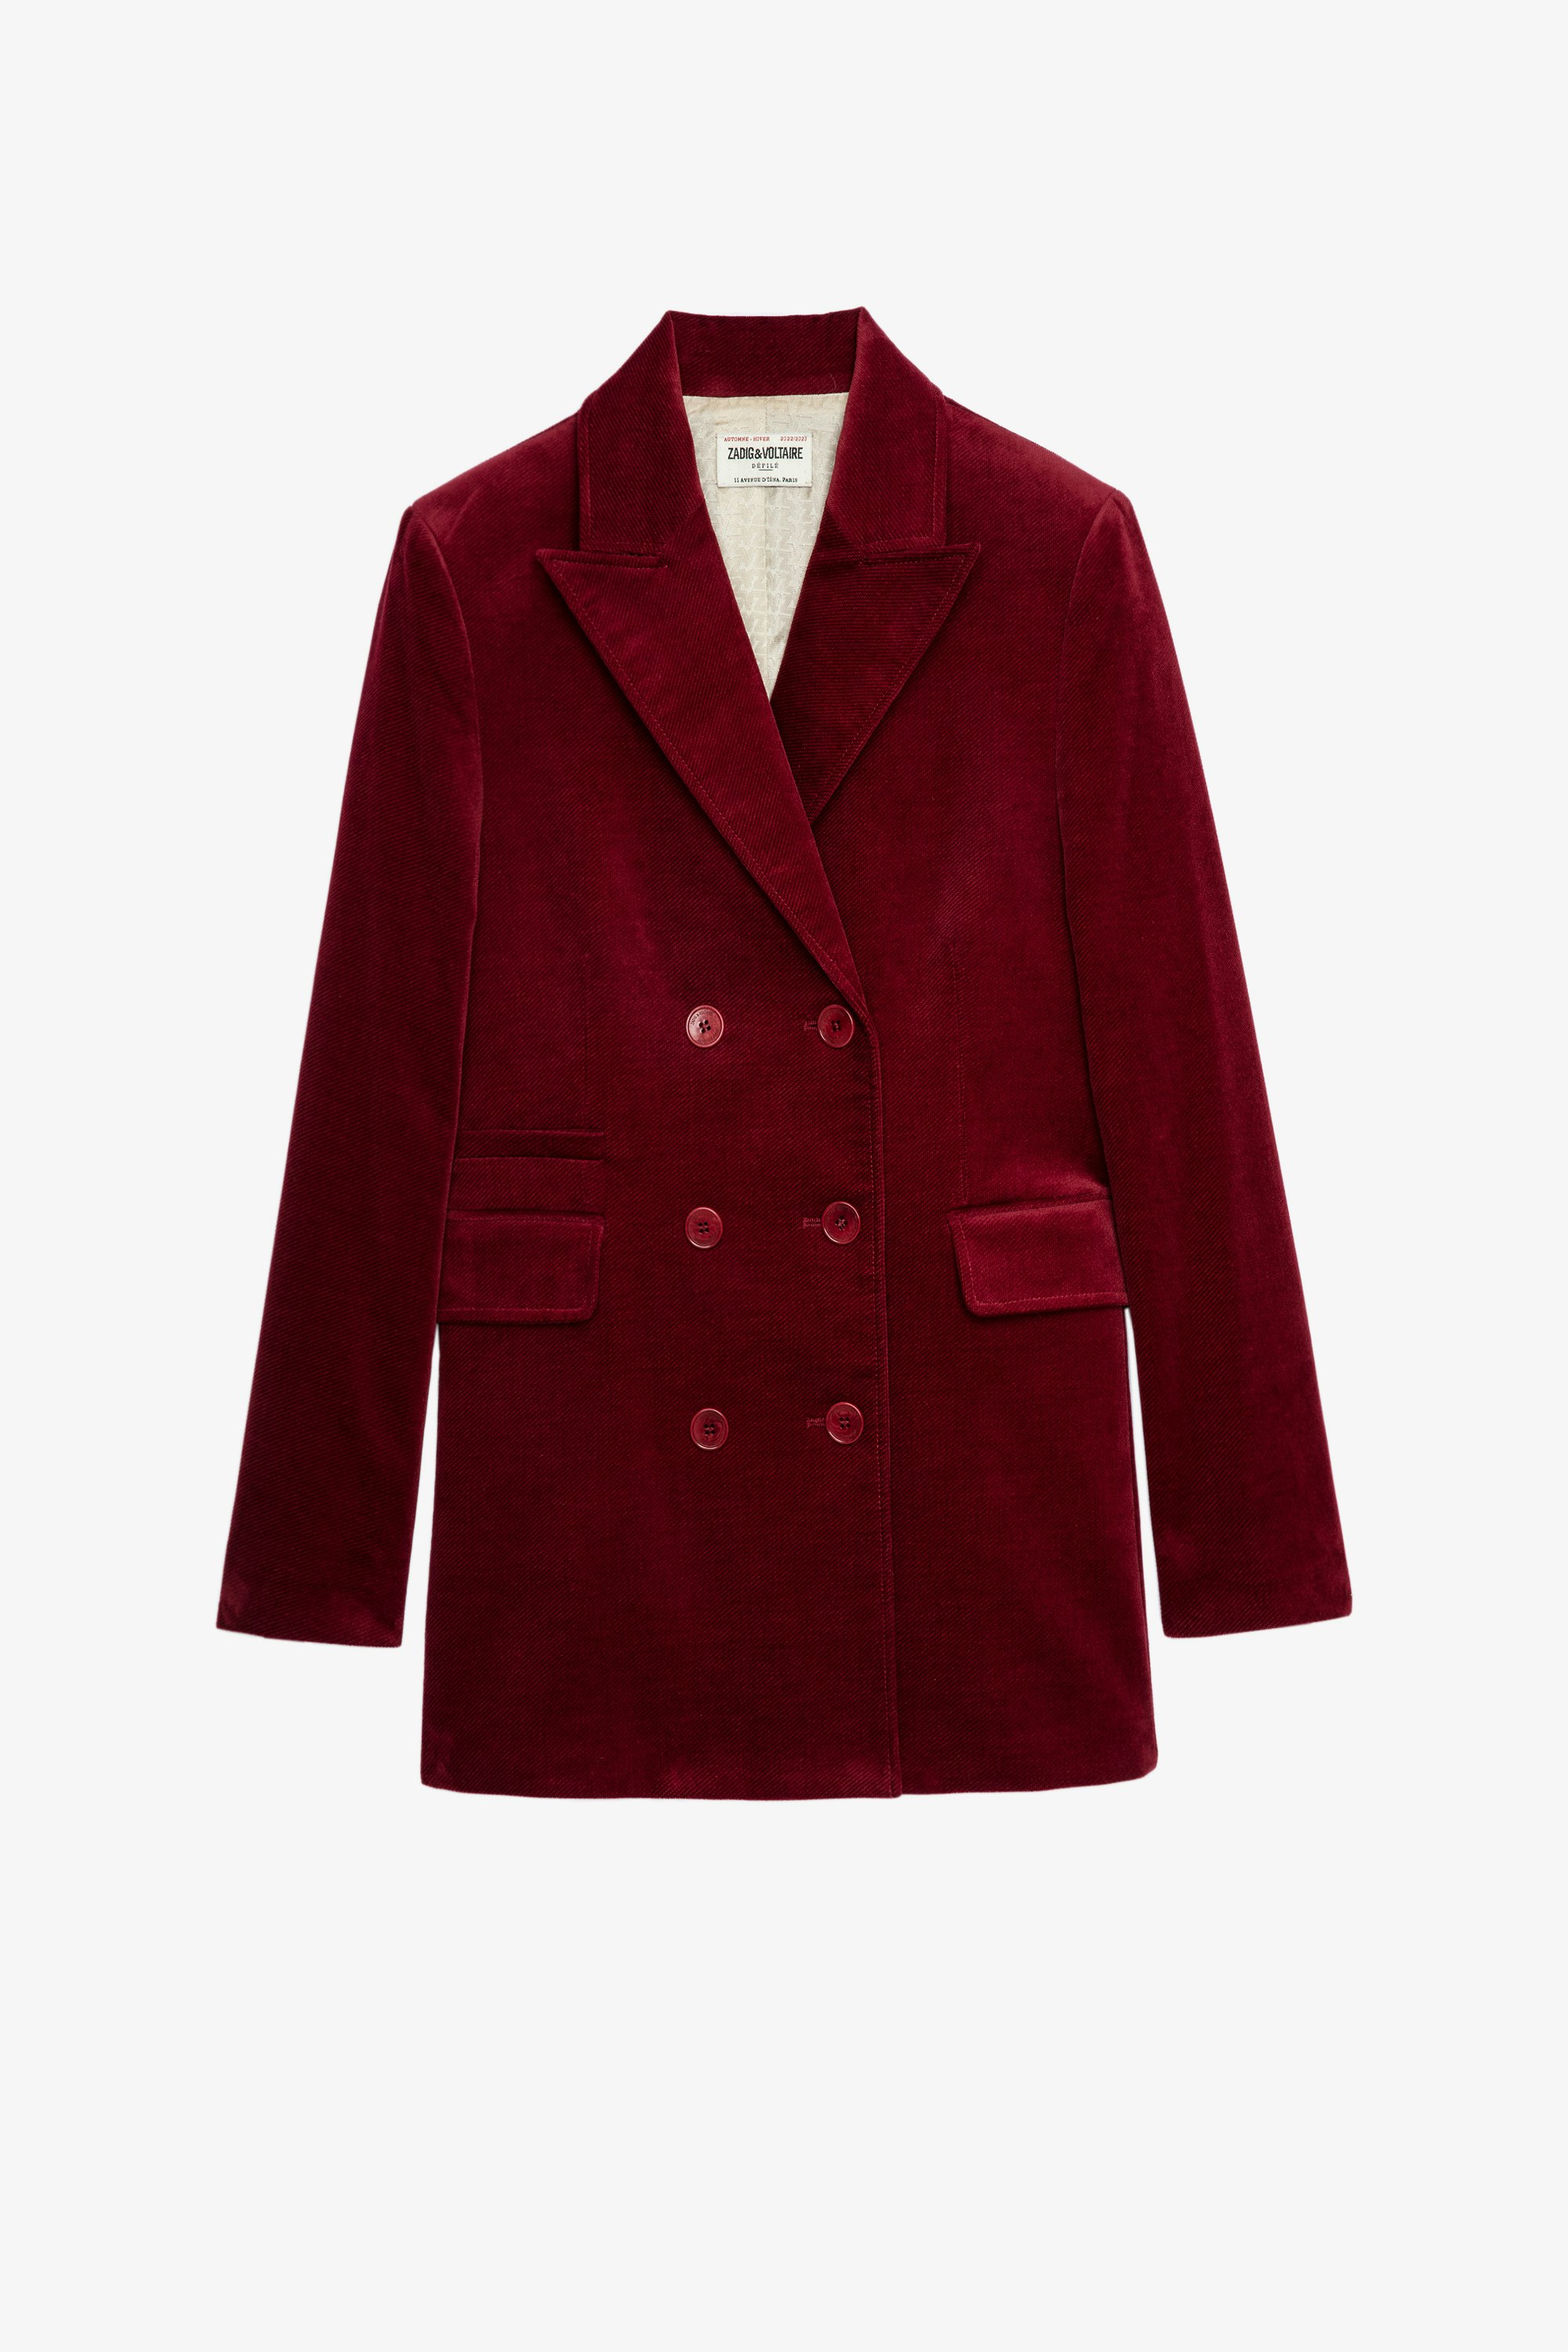 Voici Velvet Jacket Women’s structured buttoned jacket in red velvet